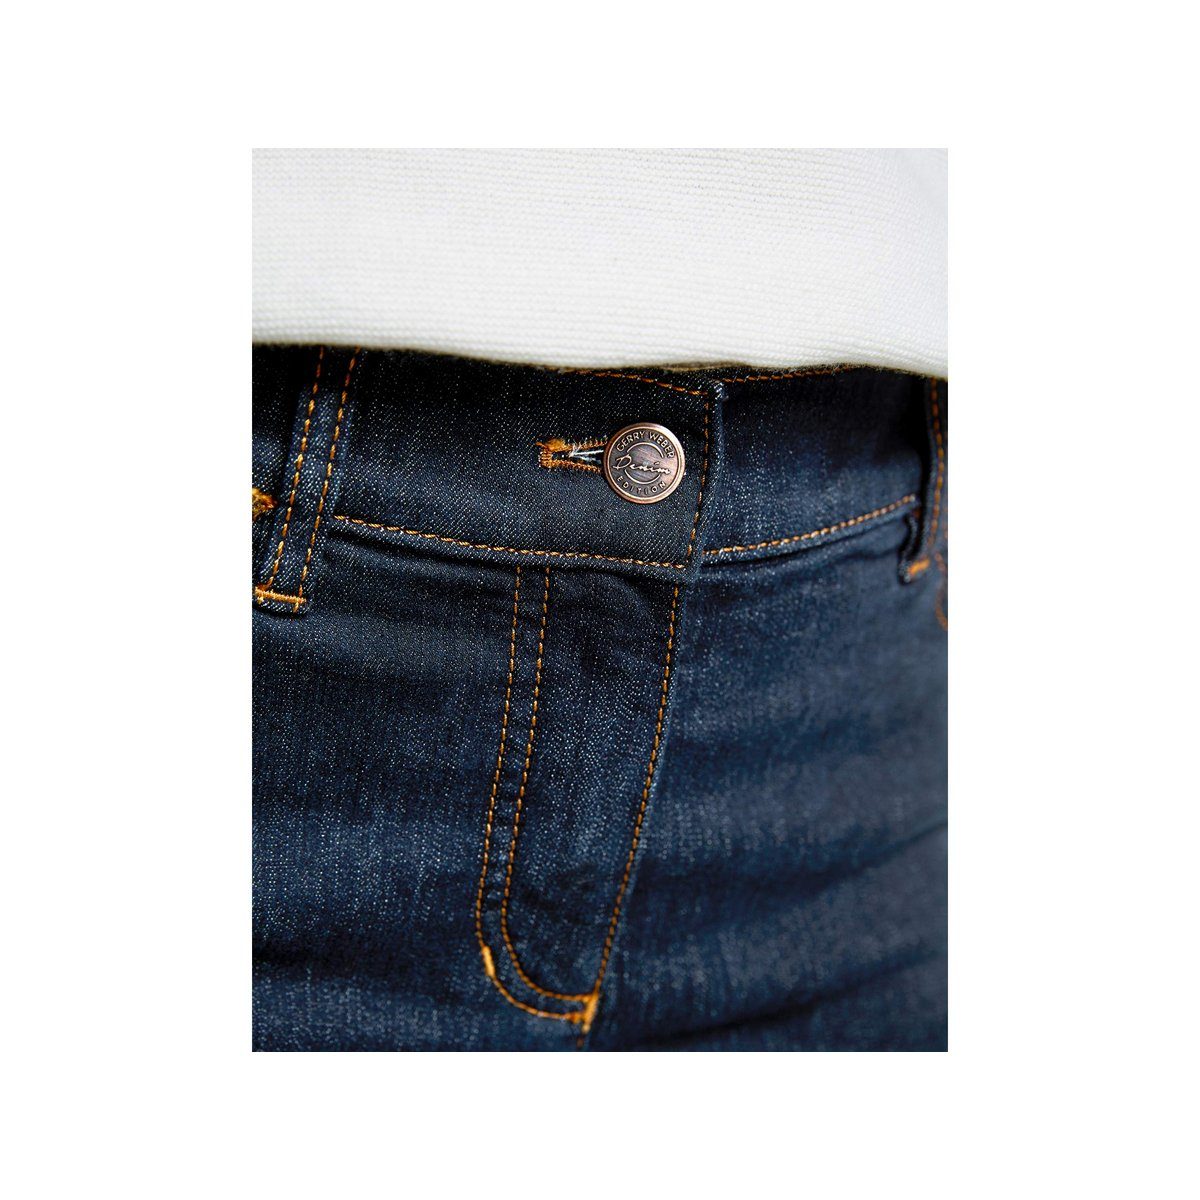 WEBER regular (83000) (1-tlg) denim blau Straight-Jeans dark GERRY